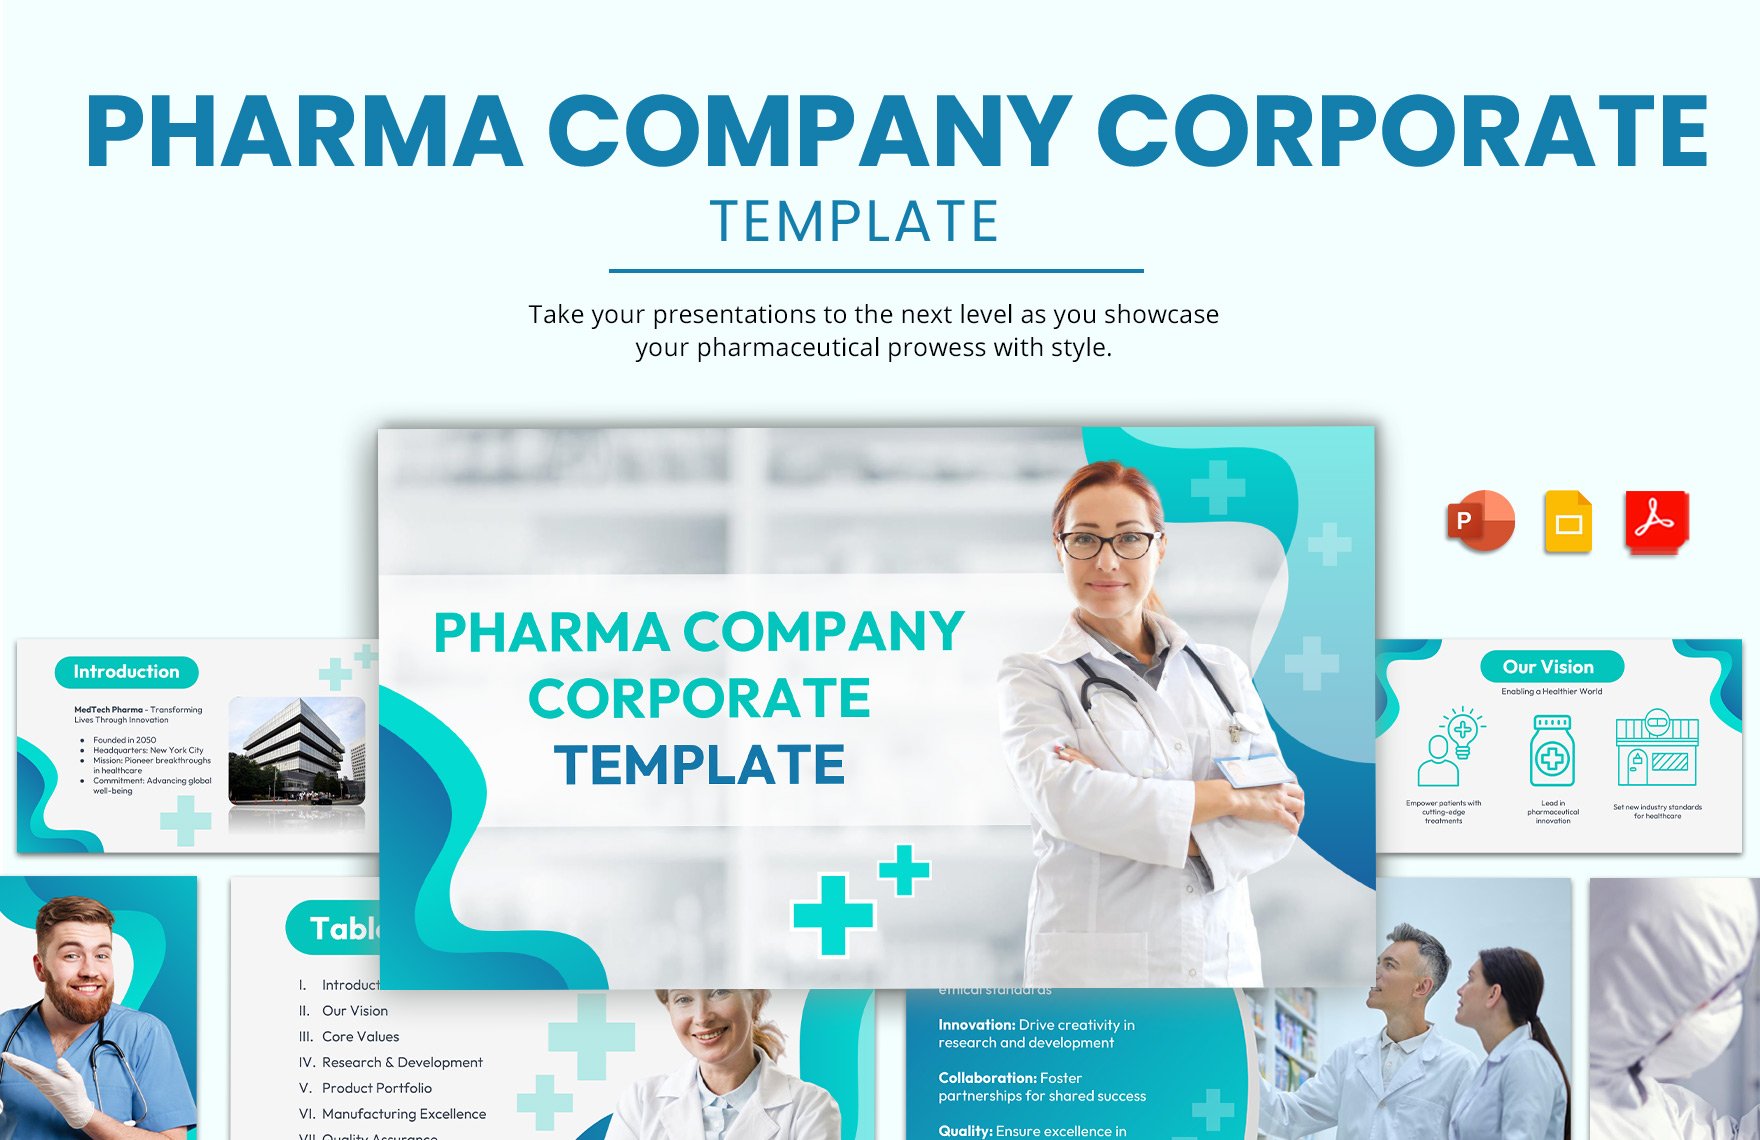 Pharma Company Corporate Template